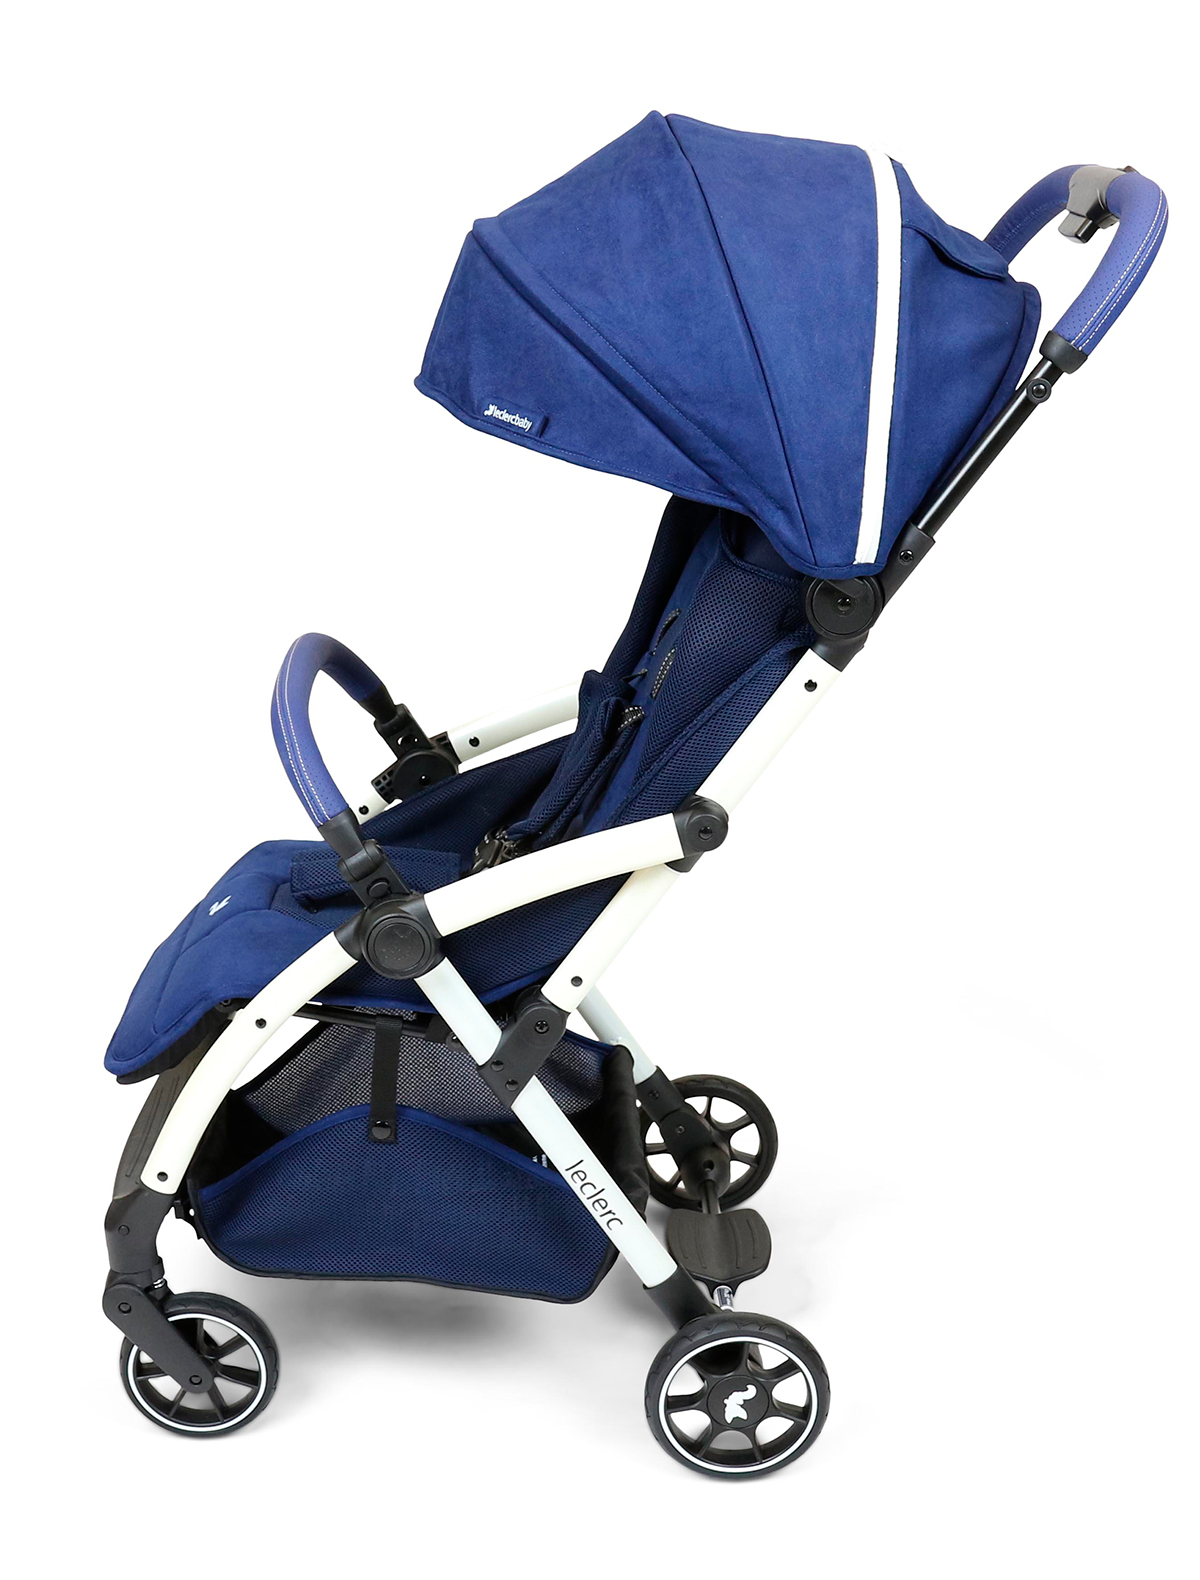 Коляска Leclerc baby 2546569, цвет синий, размер 6 4004529370022 - фото 2